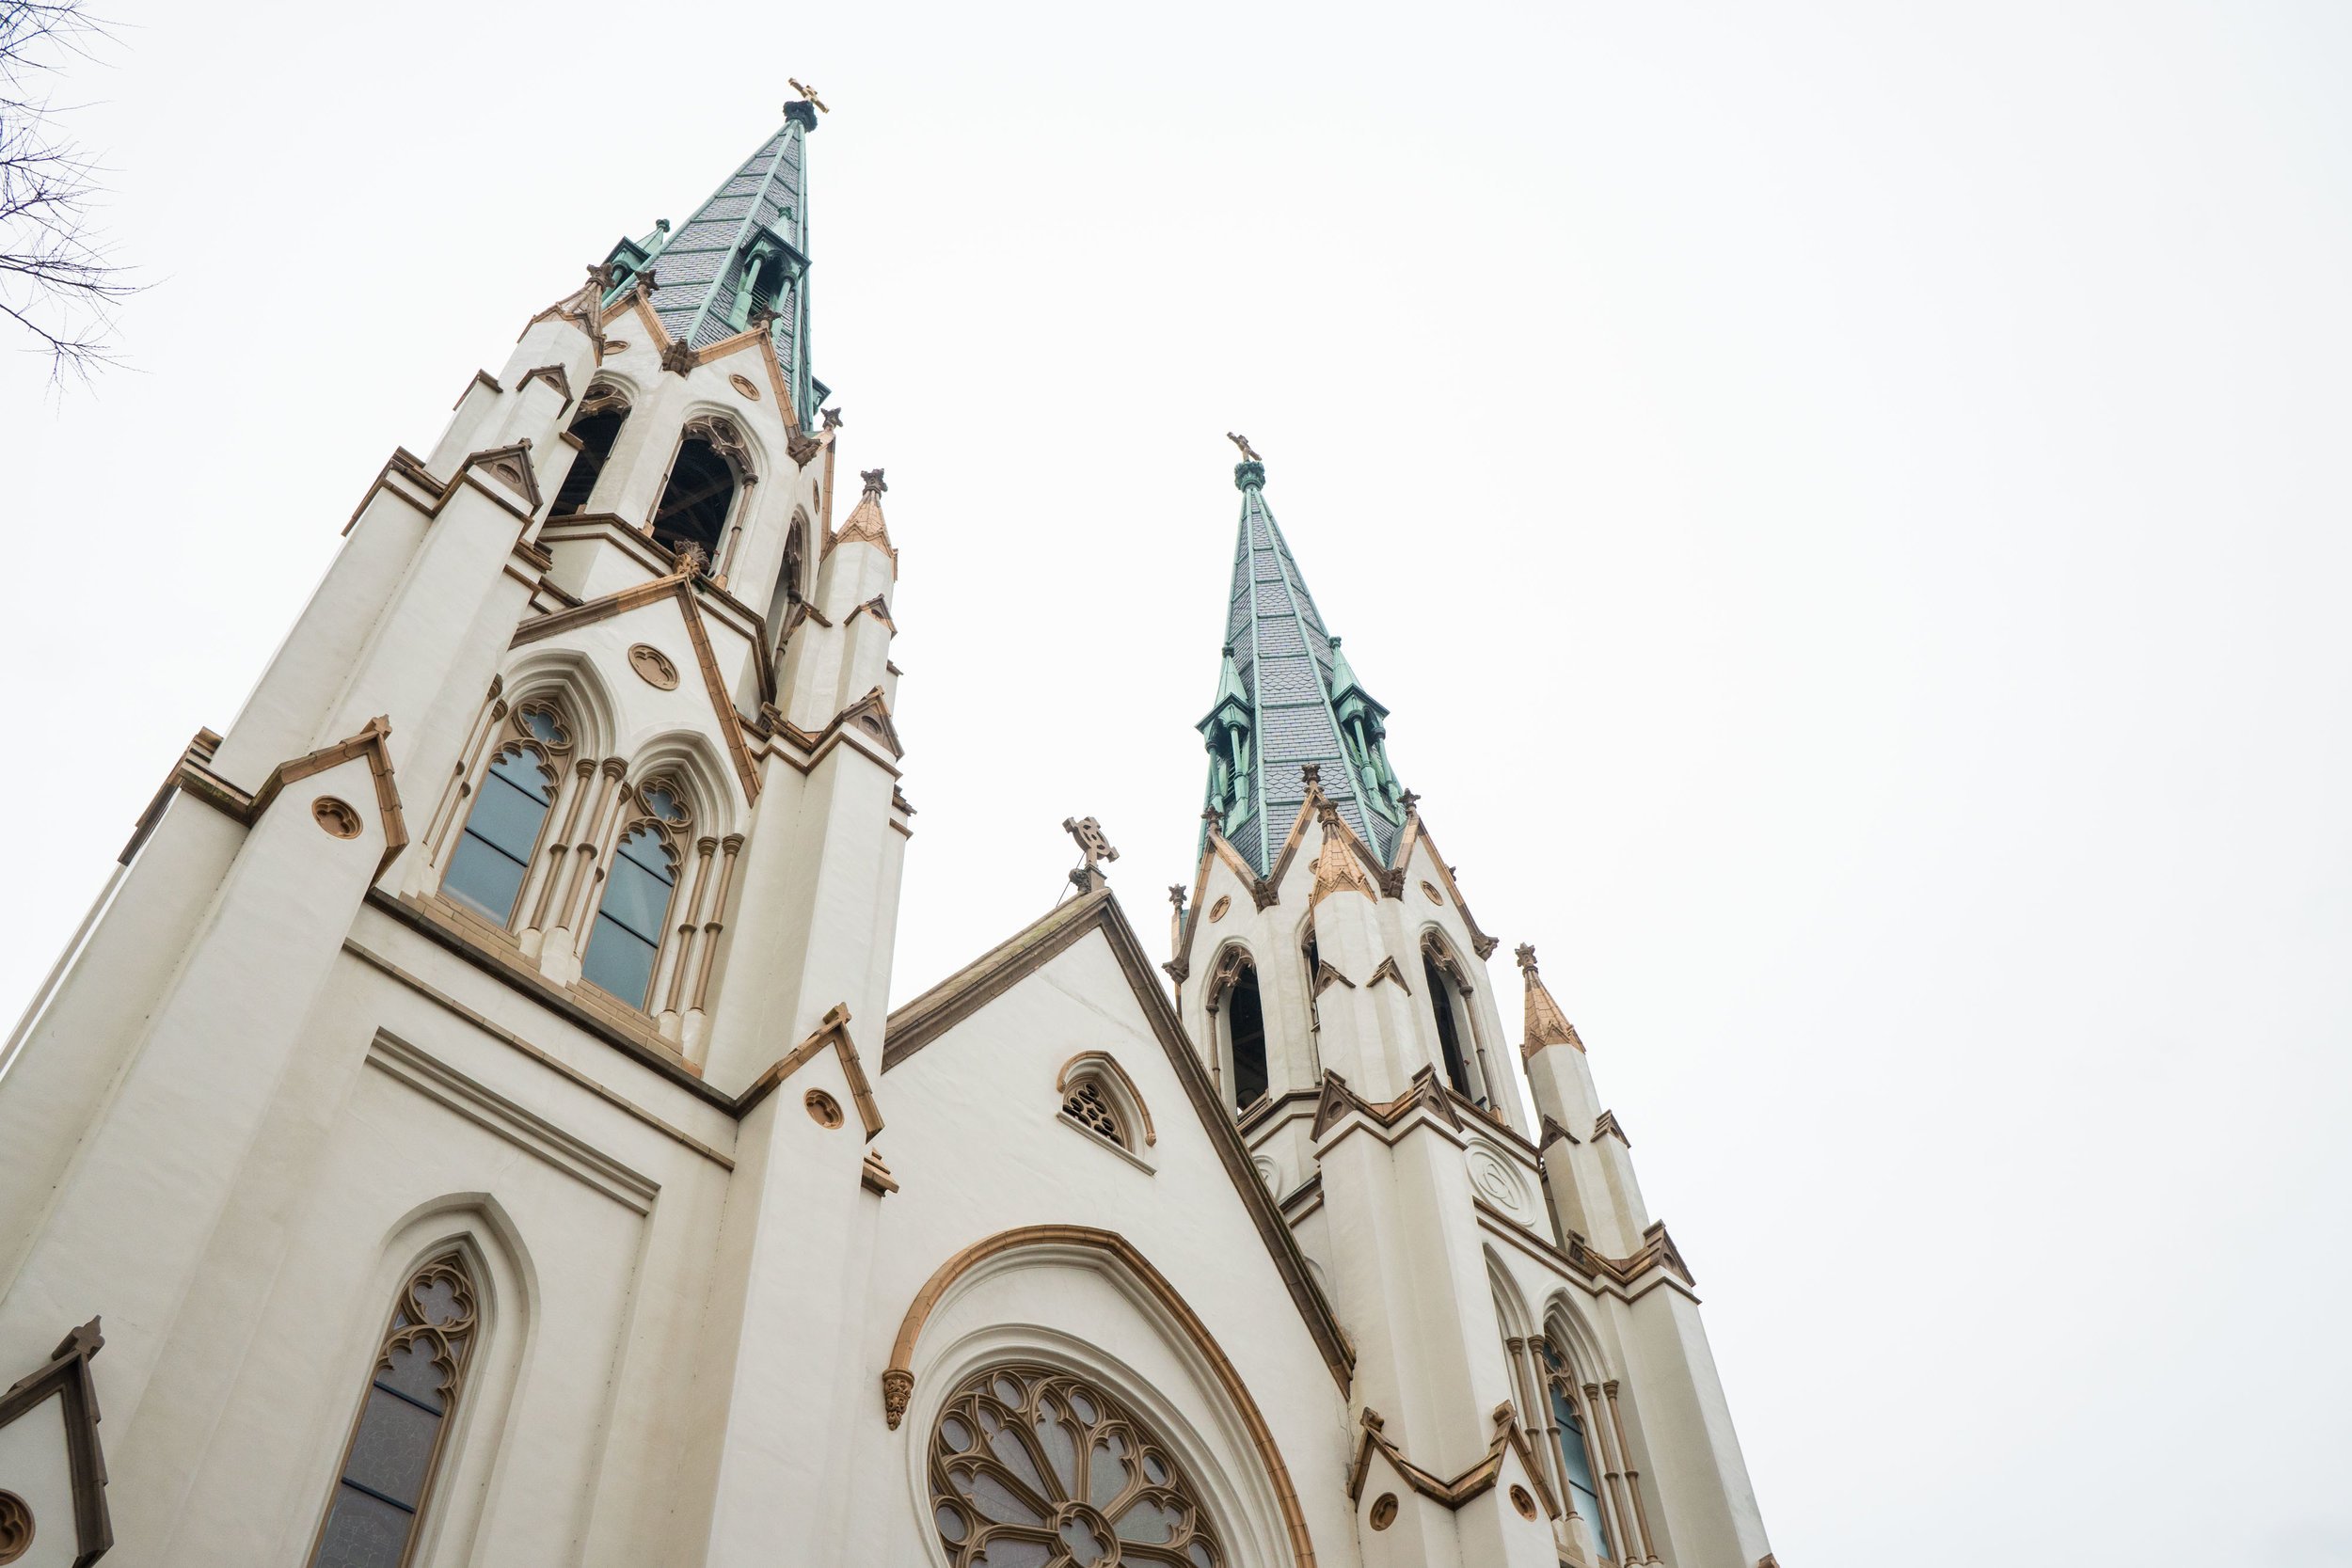  One of Savannah’s many pretty churches 